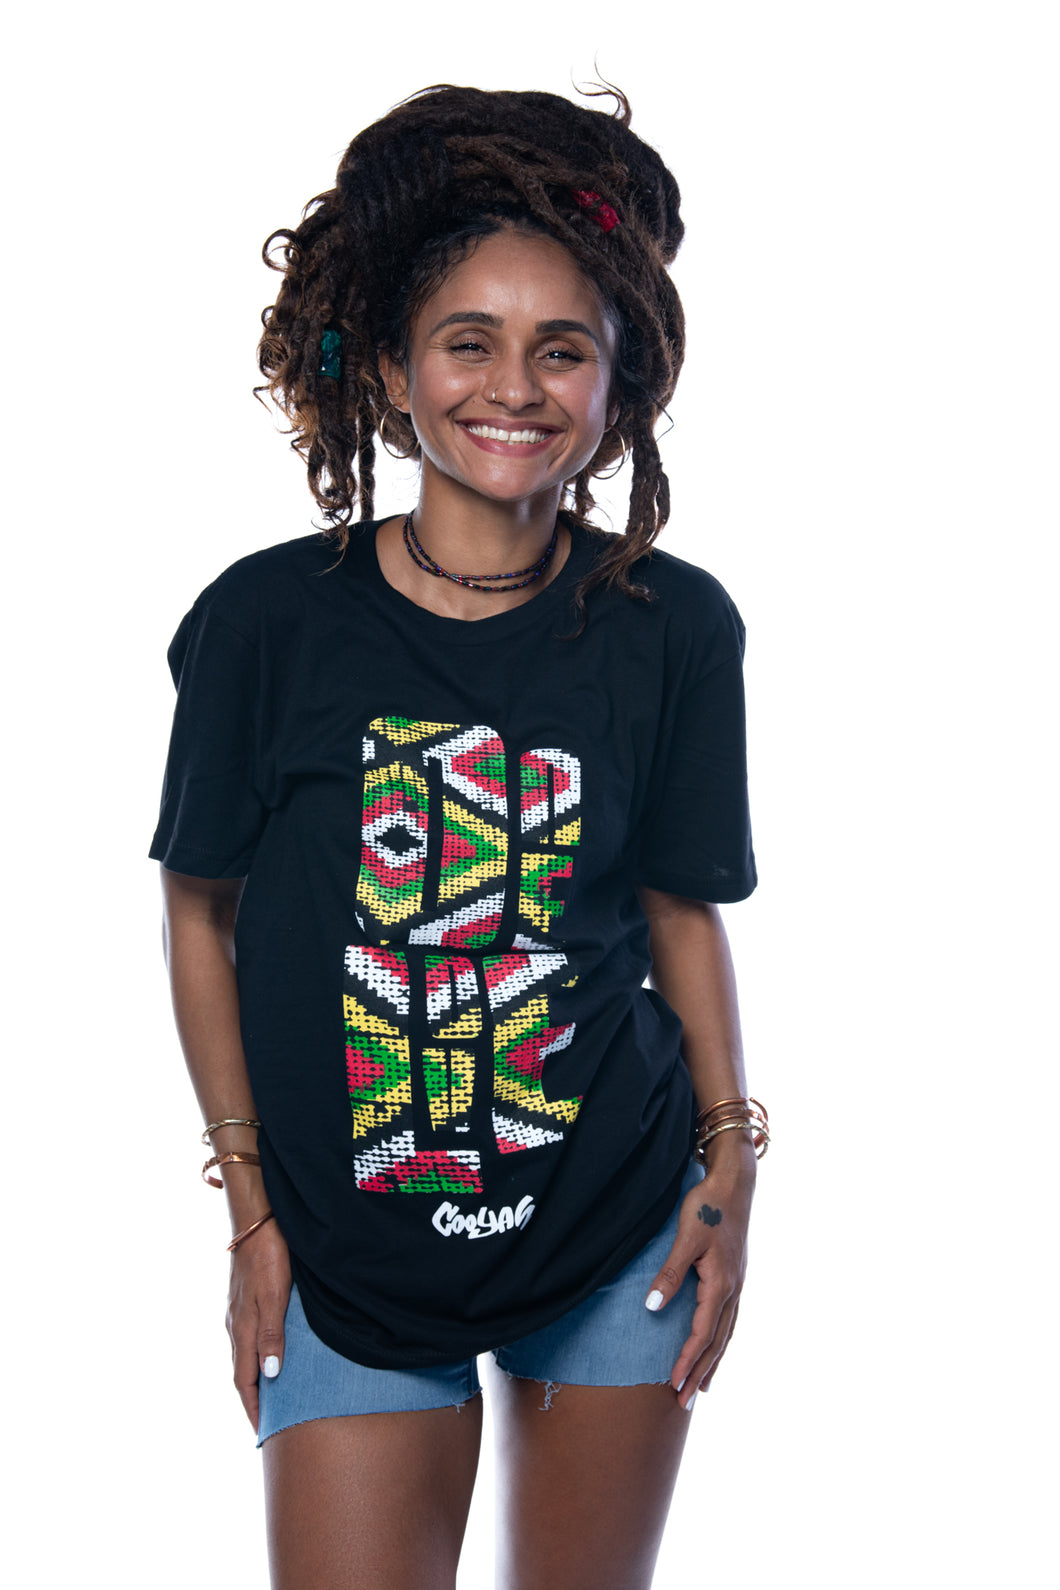 Cooyah Jamaica.  One Love Africa Print graphic tee.  Women's short sleeve, ringspun cotton tee in black.  Jamaican clothing brand.